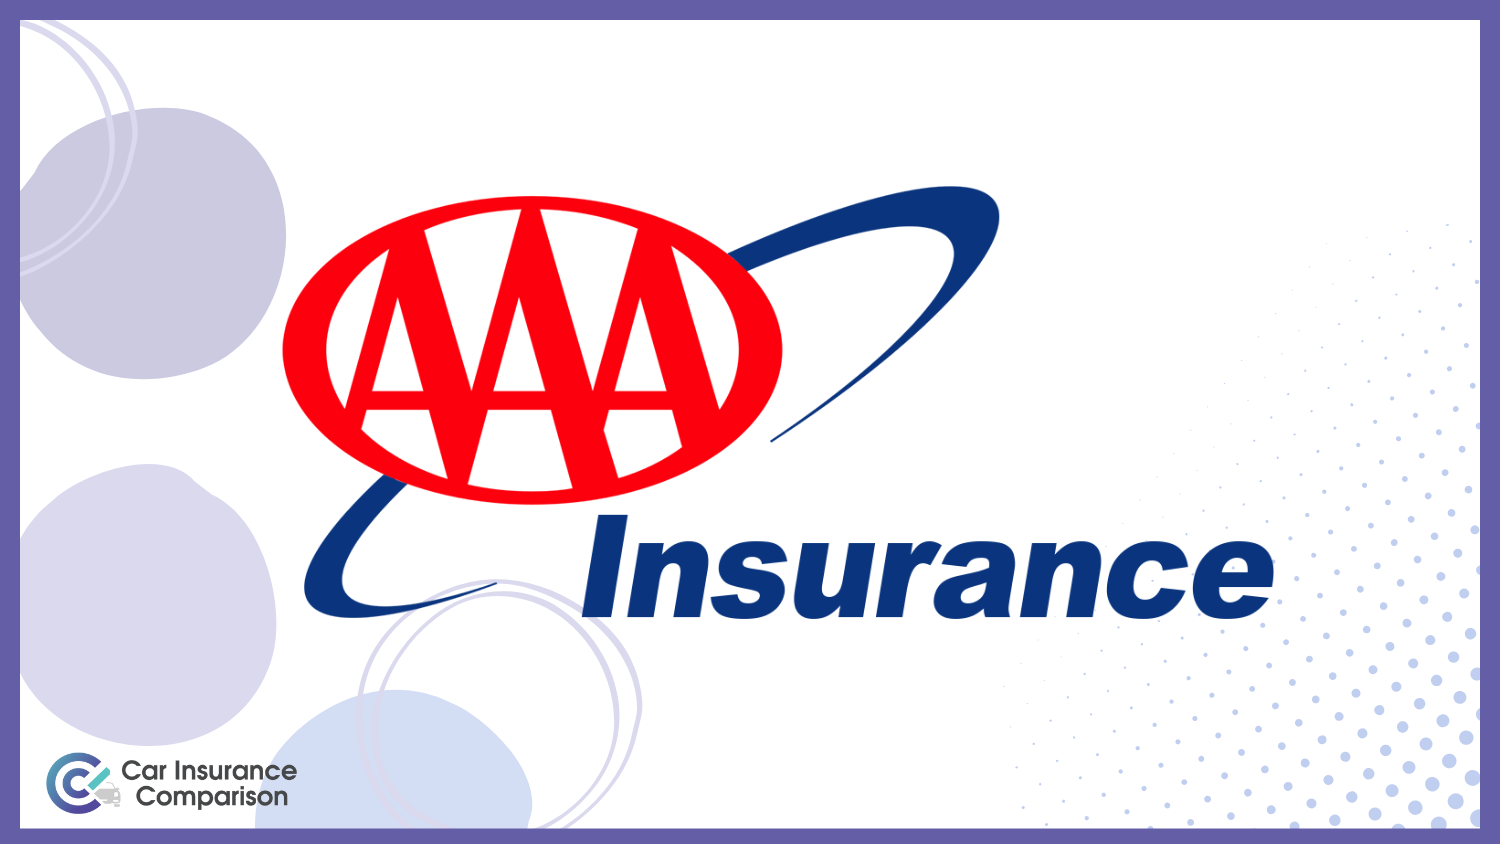 AAA: Best Car Insurance Companies for Seniors